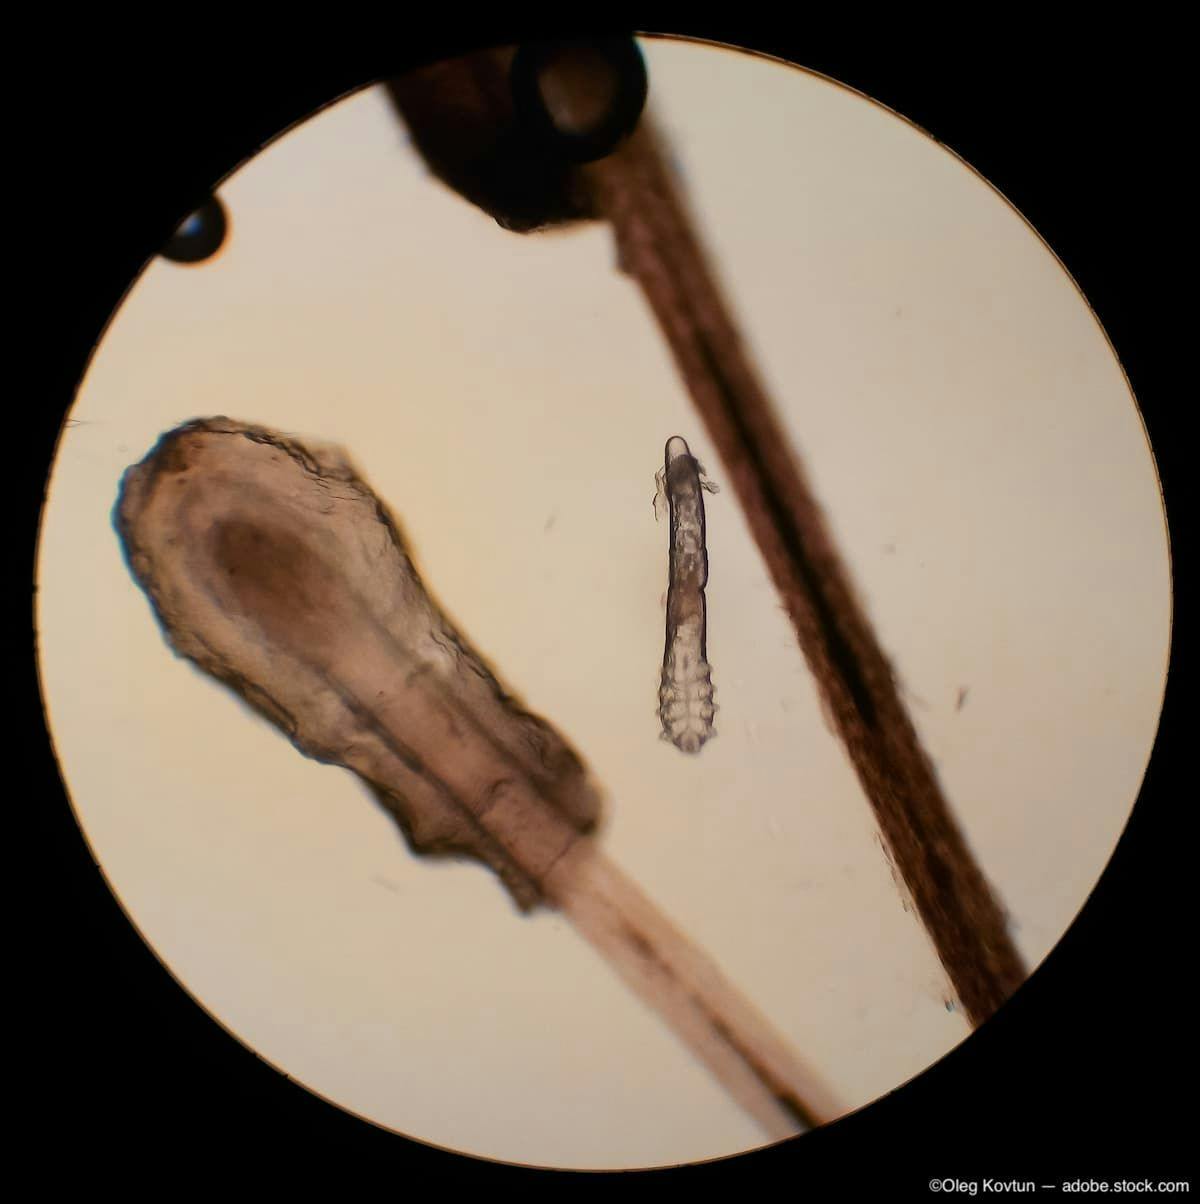 Demodex in eyelashes under microscope Image Credit: AdobeStock/OlegKovtun